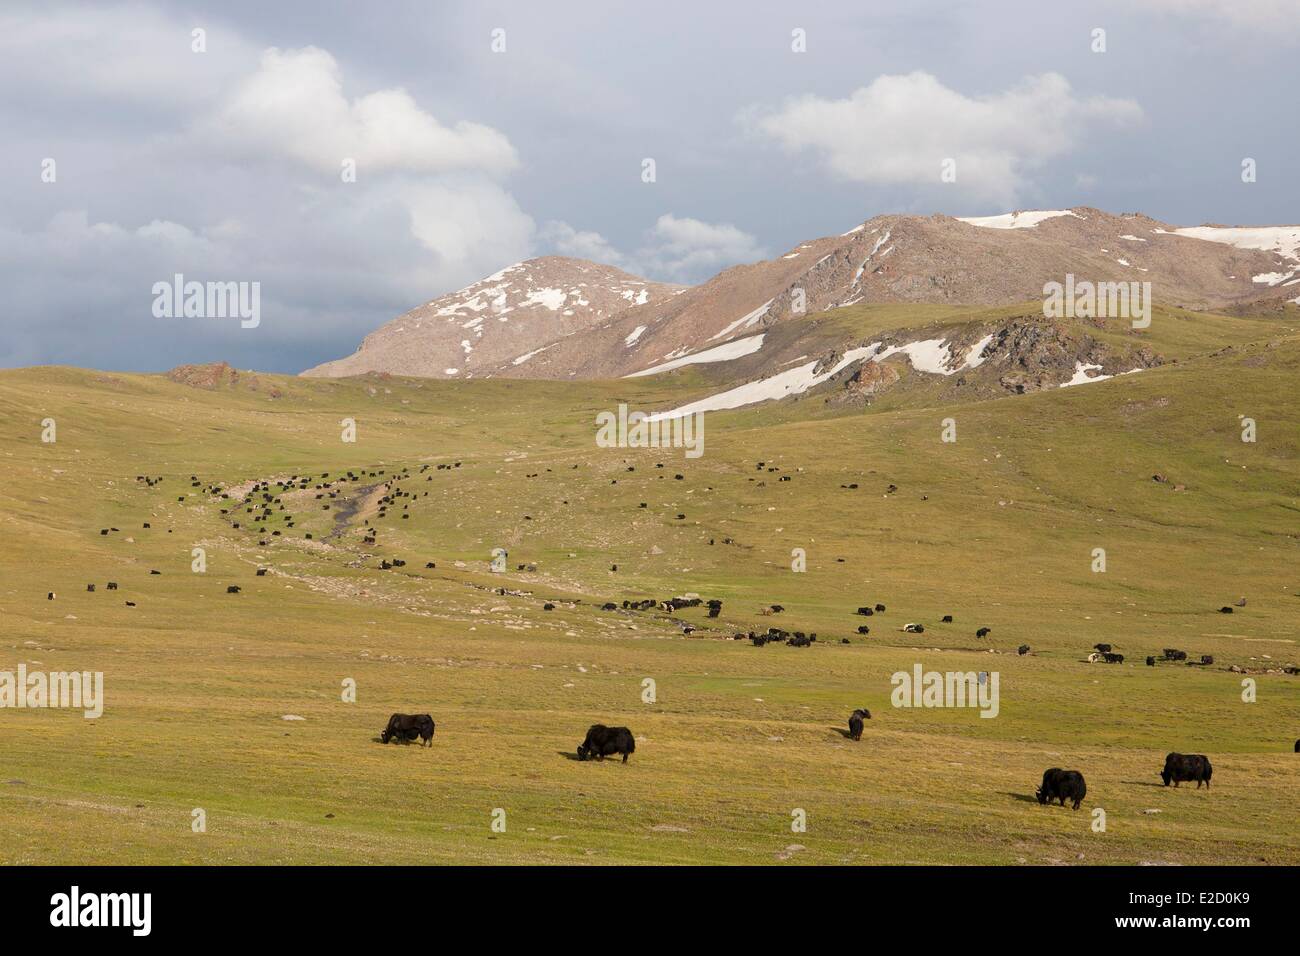 Kirgisistan Naryn Provinz Sömmerung der Yaks auf Berg Song-Kol See staatliche zoologische Reserve Weiden Stockfoto